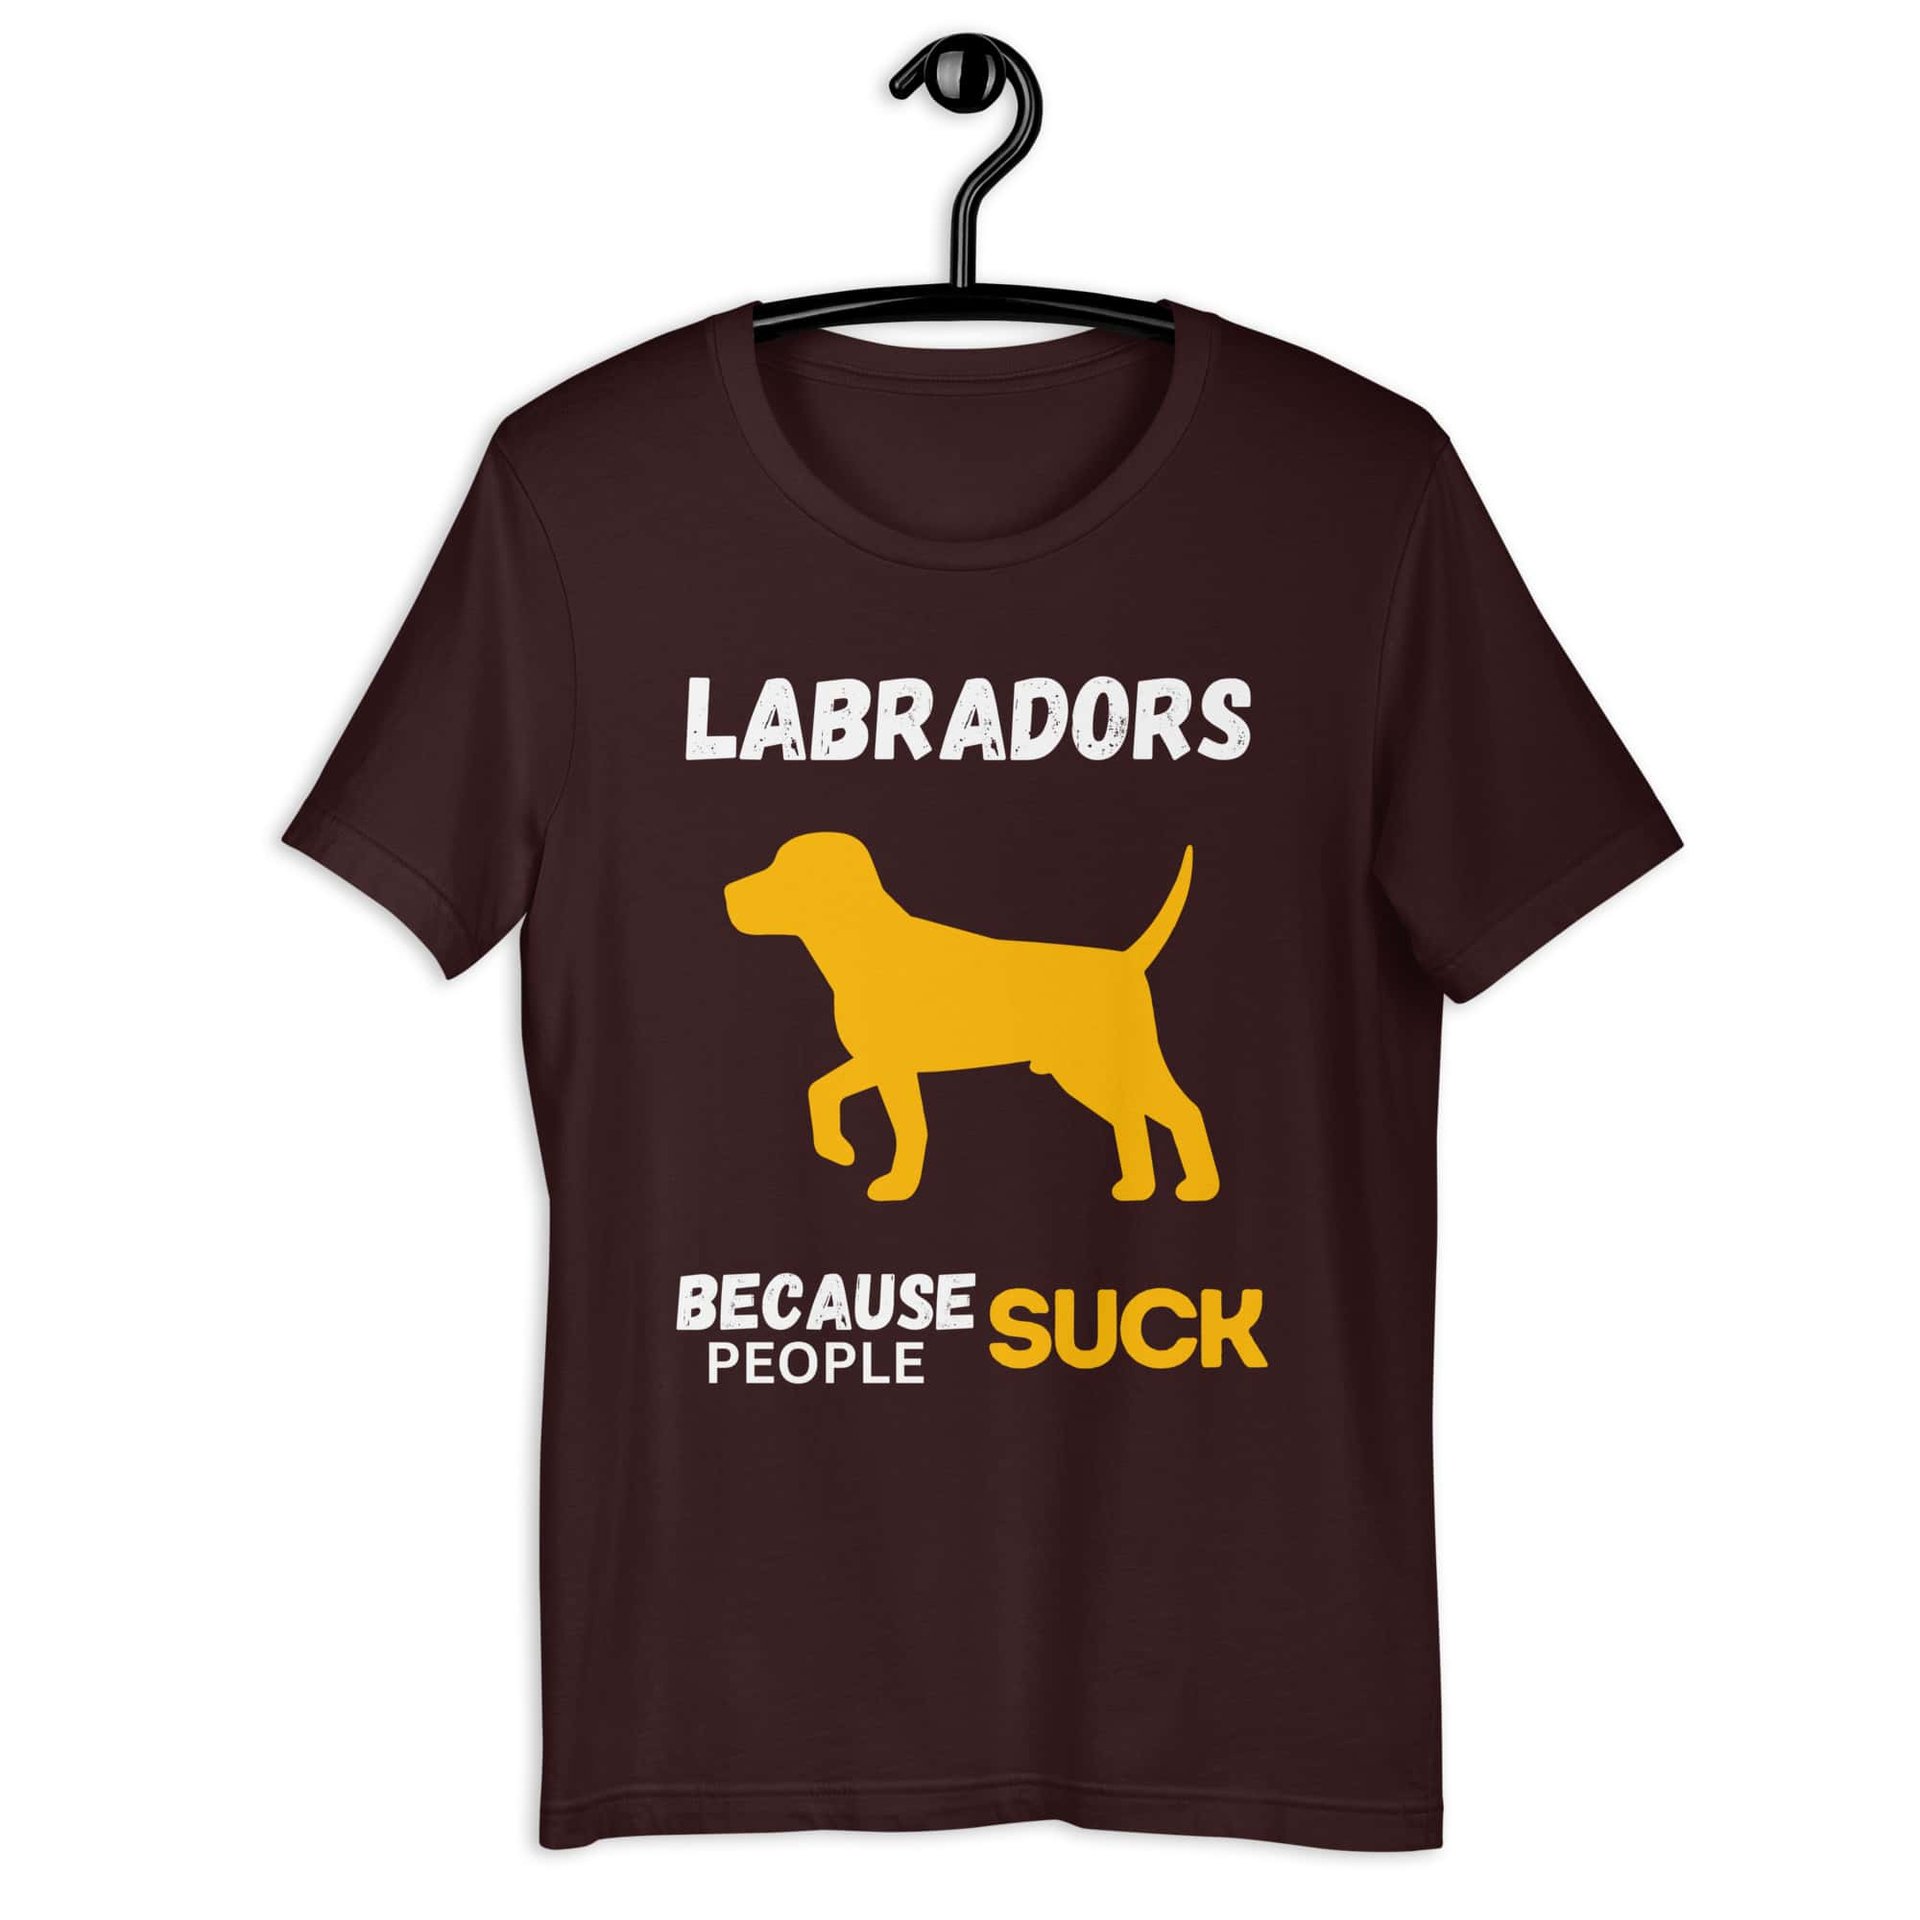 Labradors Because People Suck Unisex T-Shirt brown